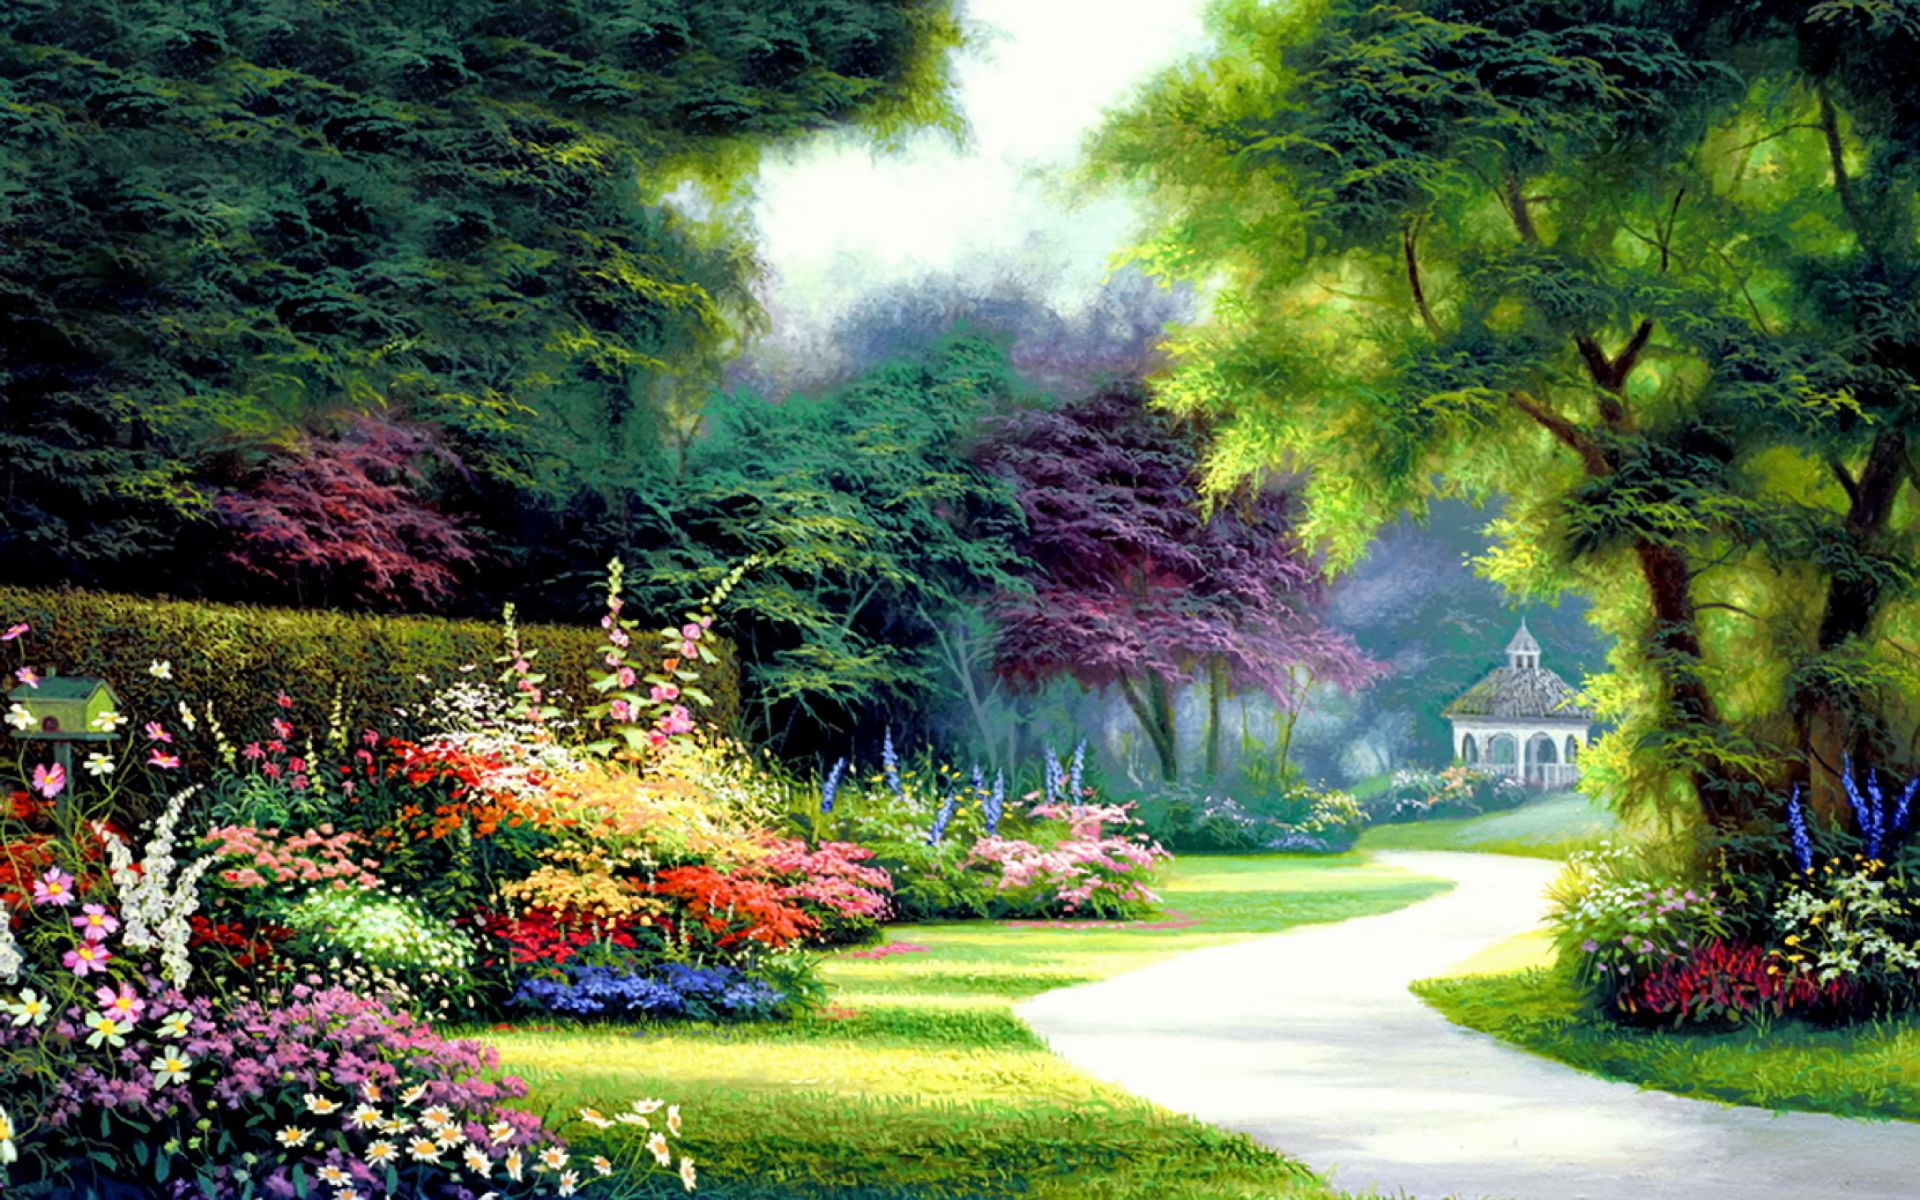 painting, artistic, colorful, flower, gazebo, path, spring, tree